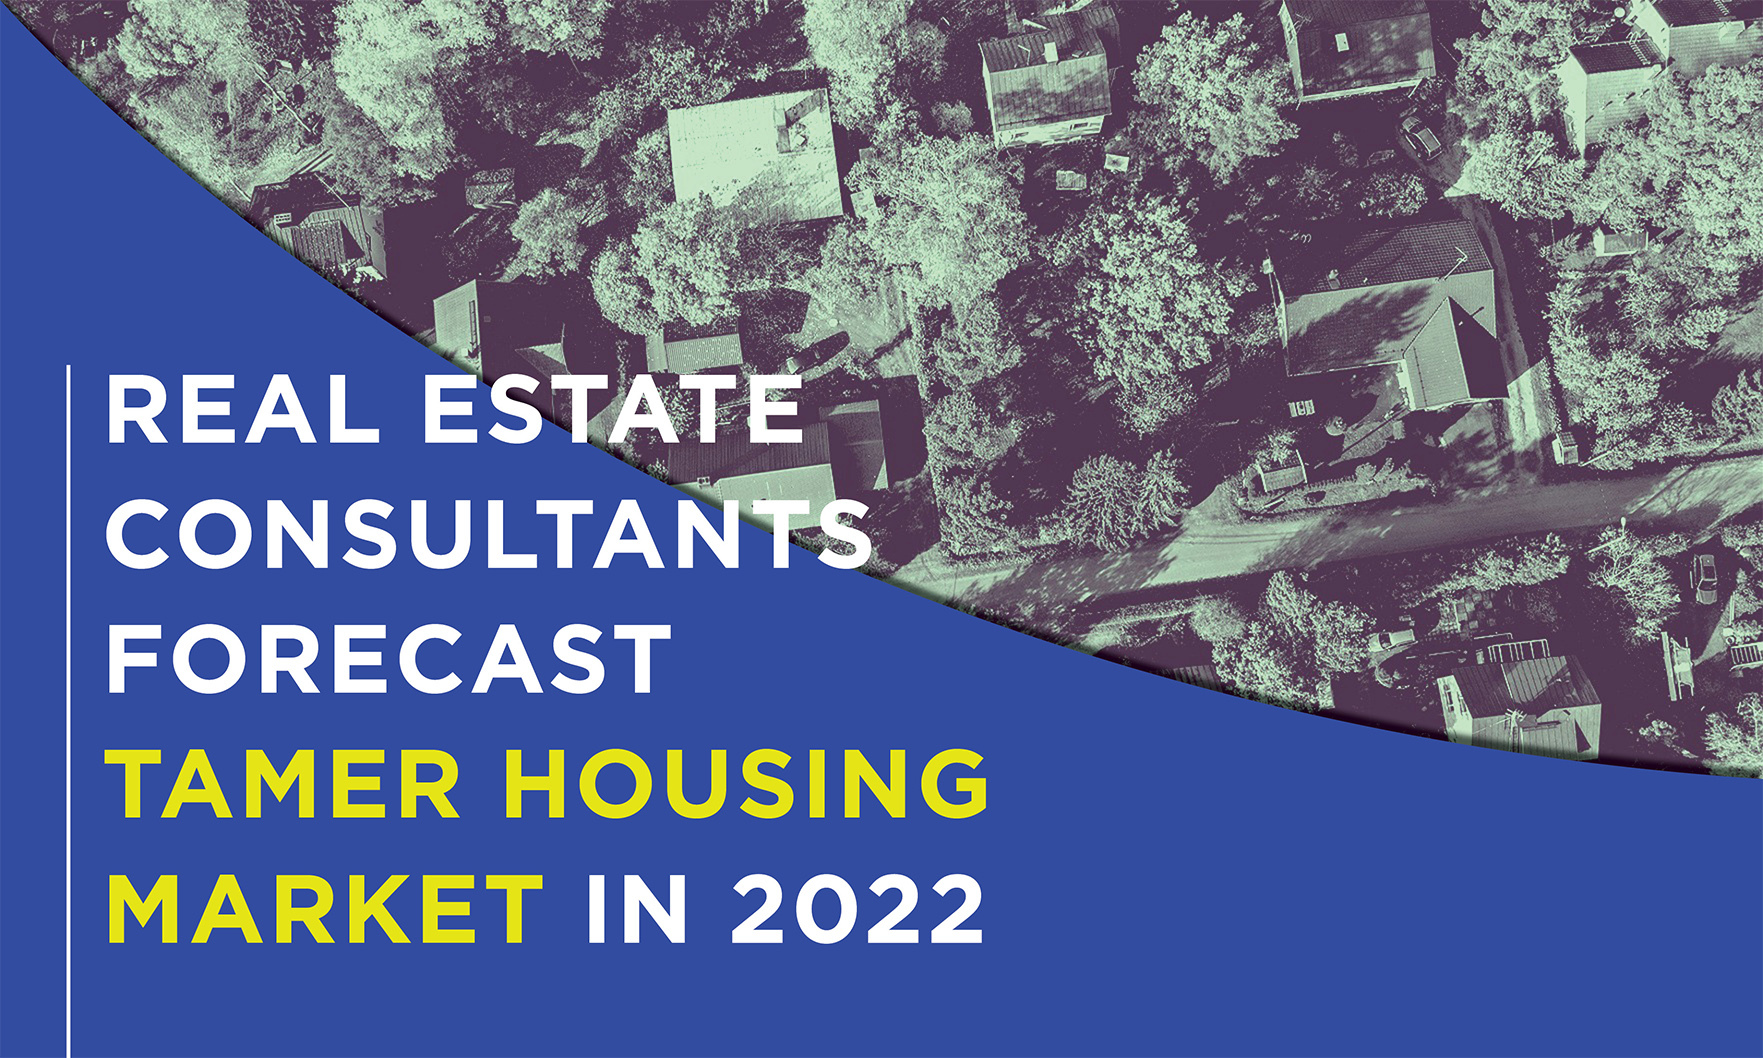 Real estate advisors project tamer housing market in 2022 - Atlanta ...